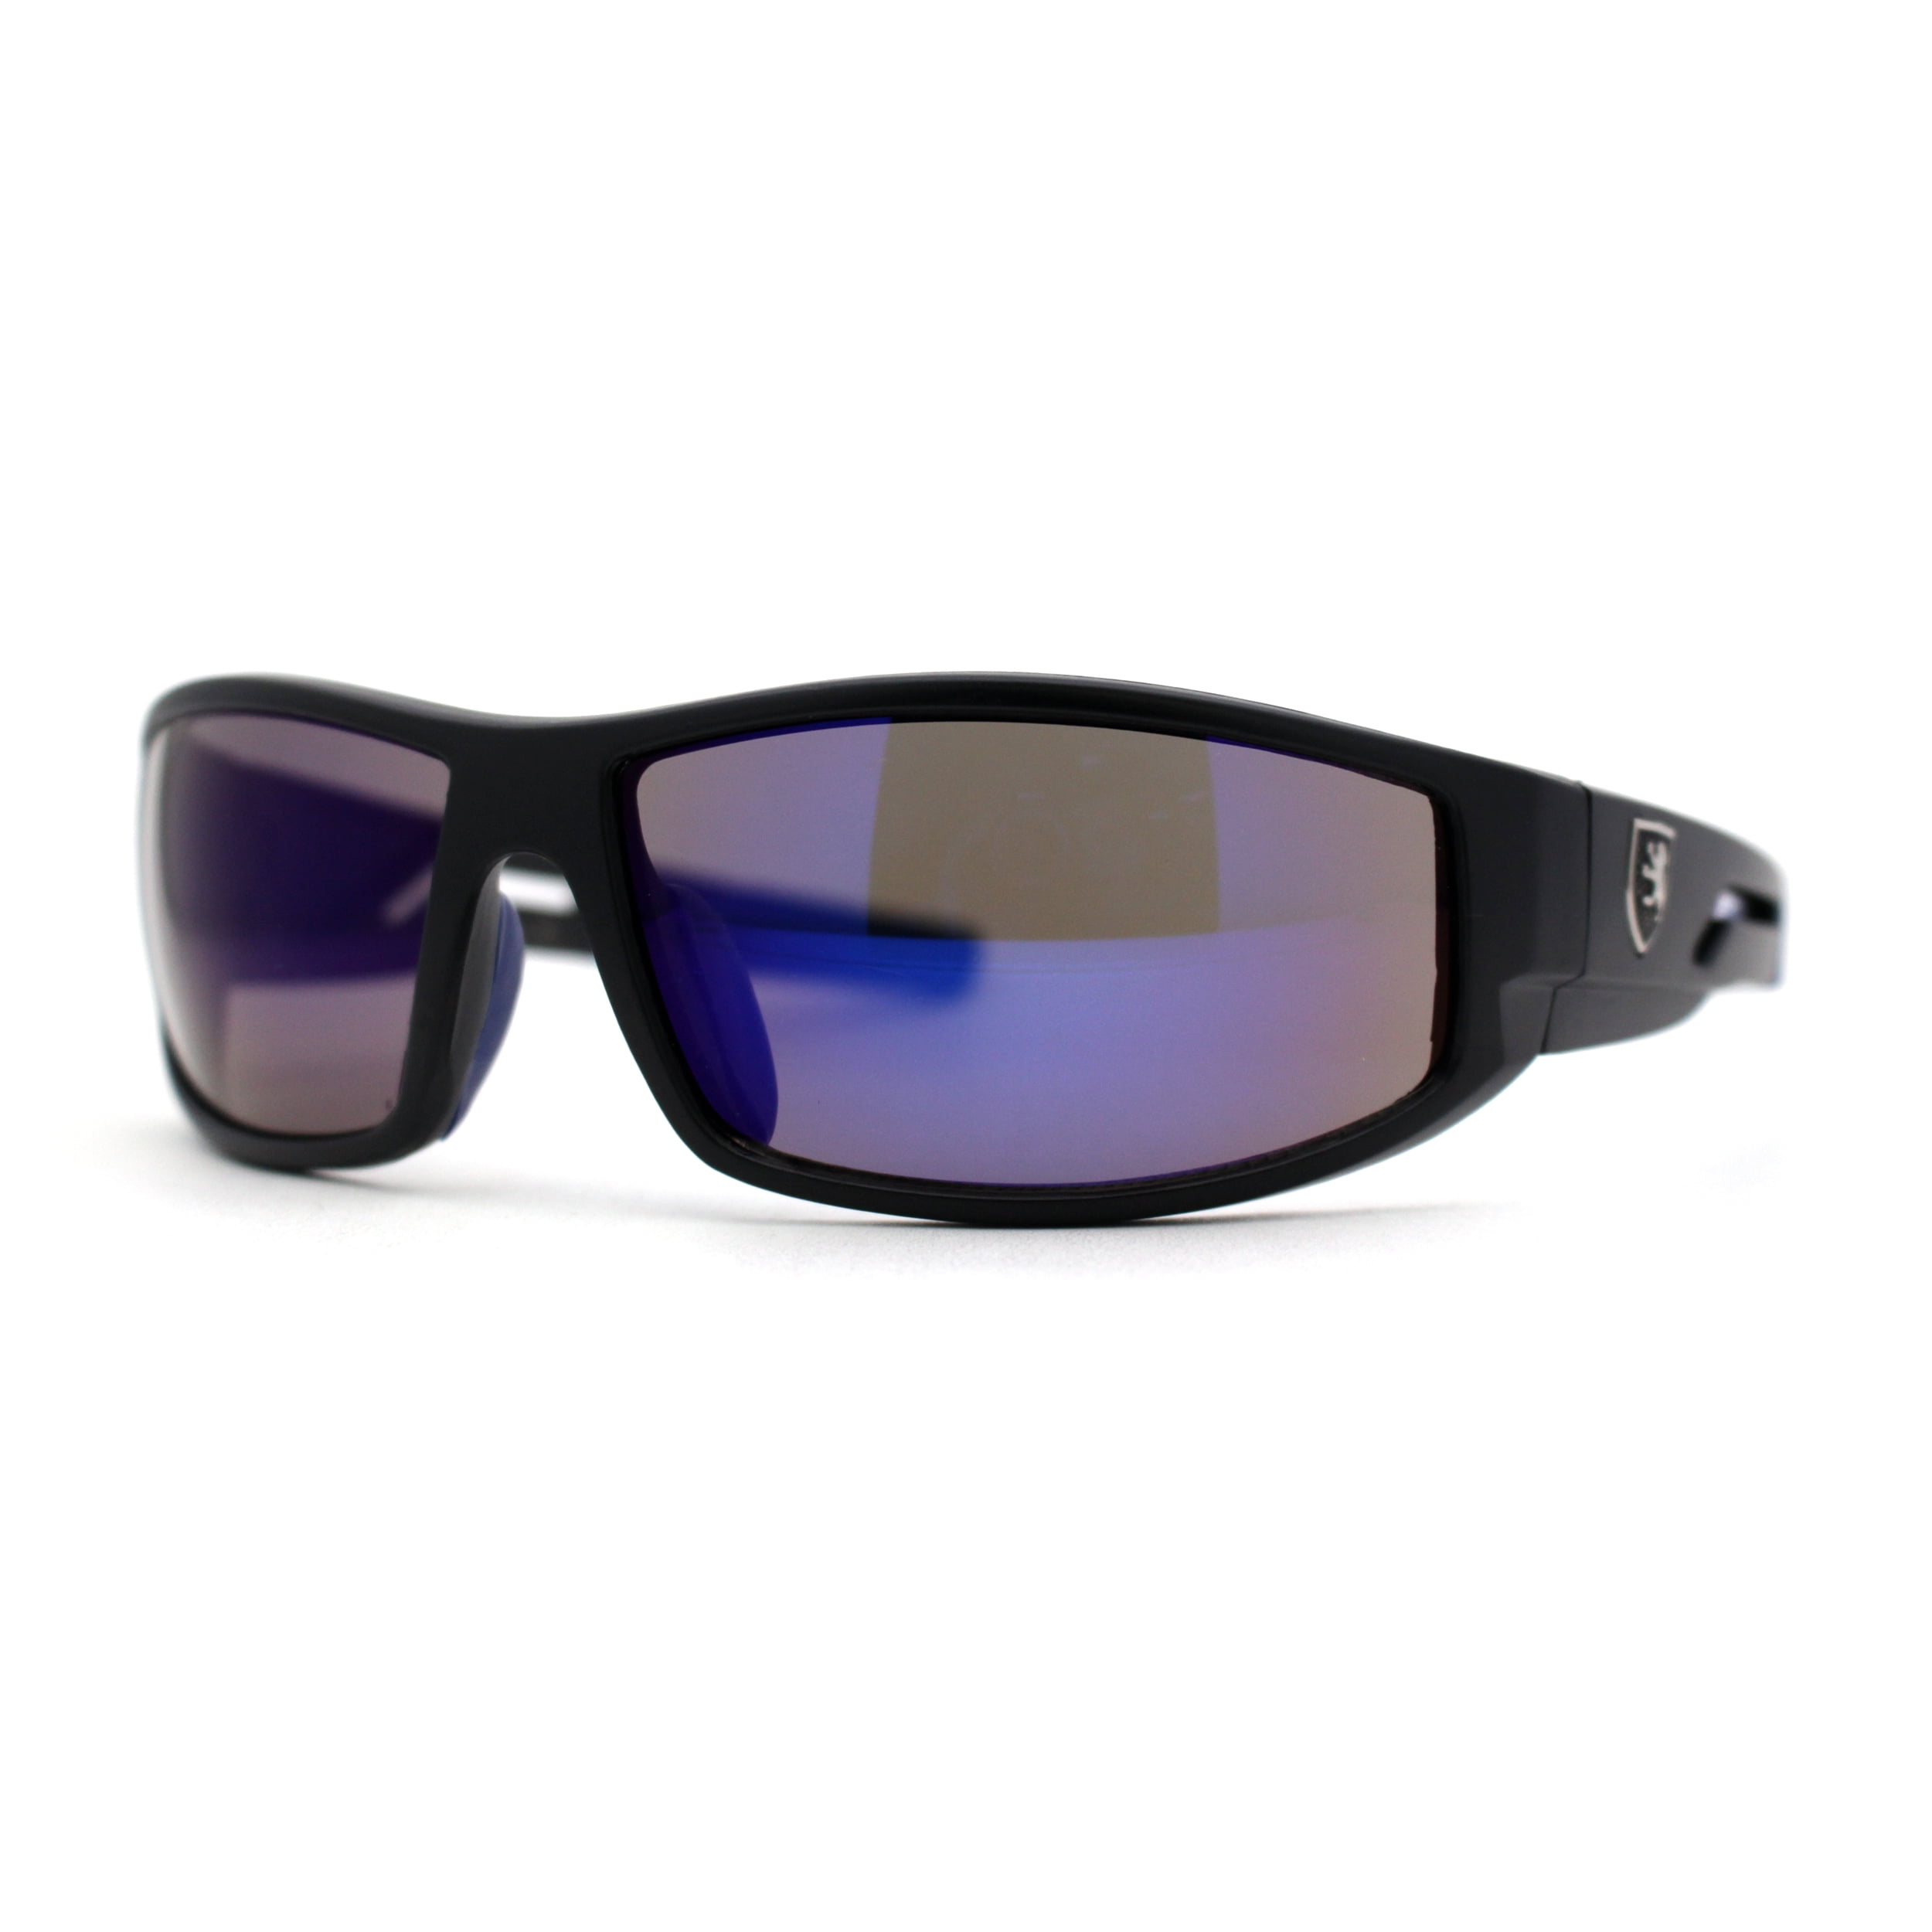 Rider Sports Sunglasses Polycarbonate Blue Mirror Shatterproof Cat-3 UV400 Lense 